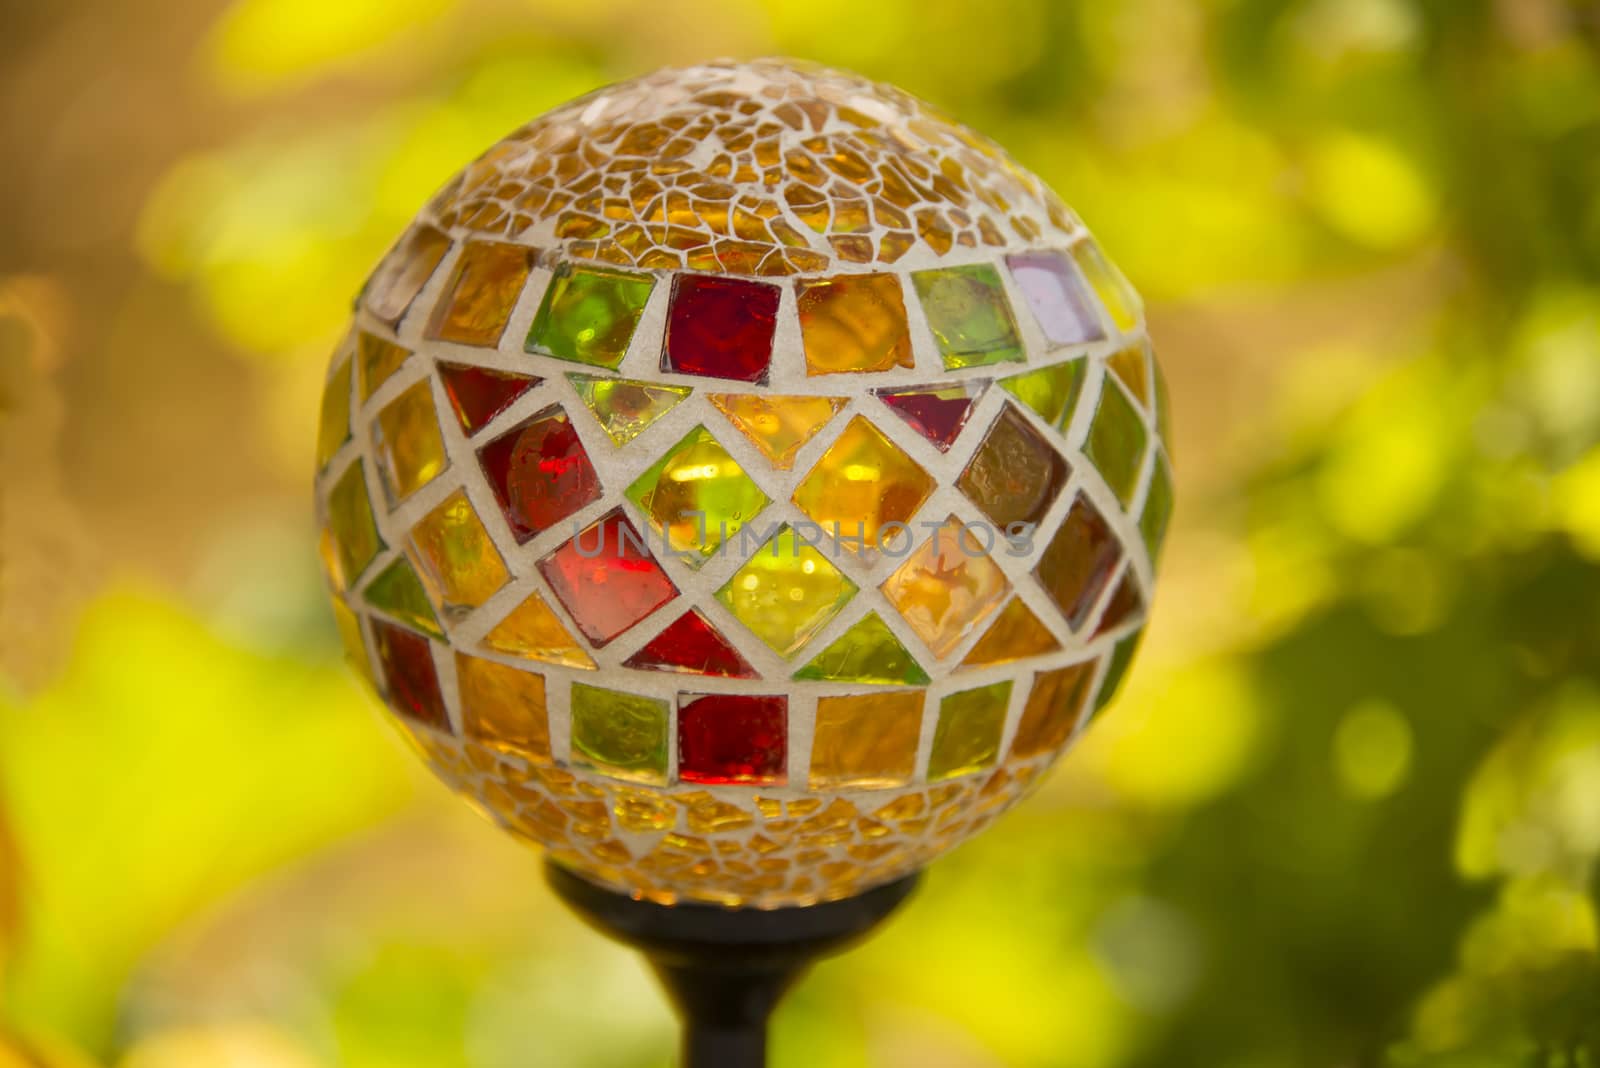 An orange mosaic solar lamp